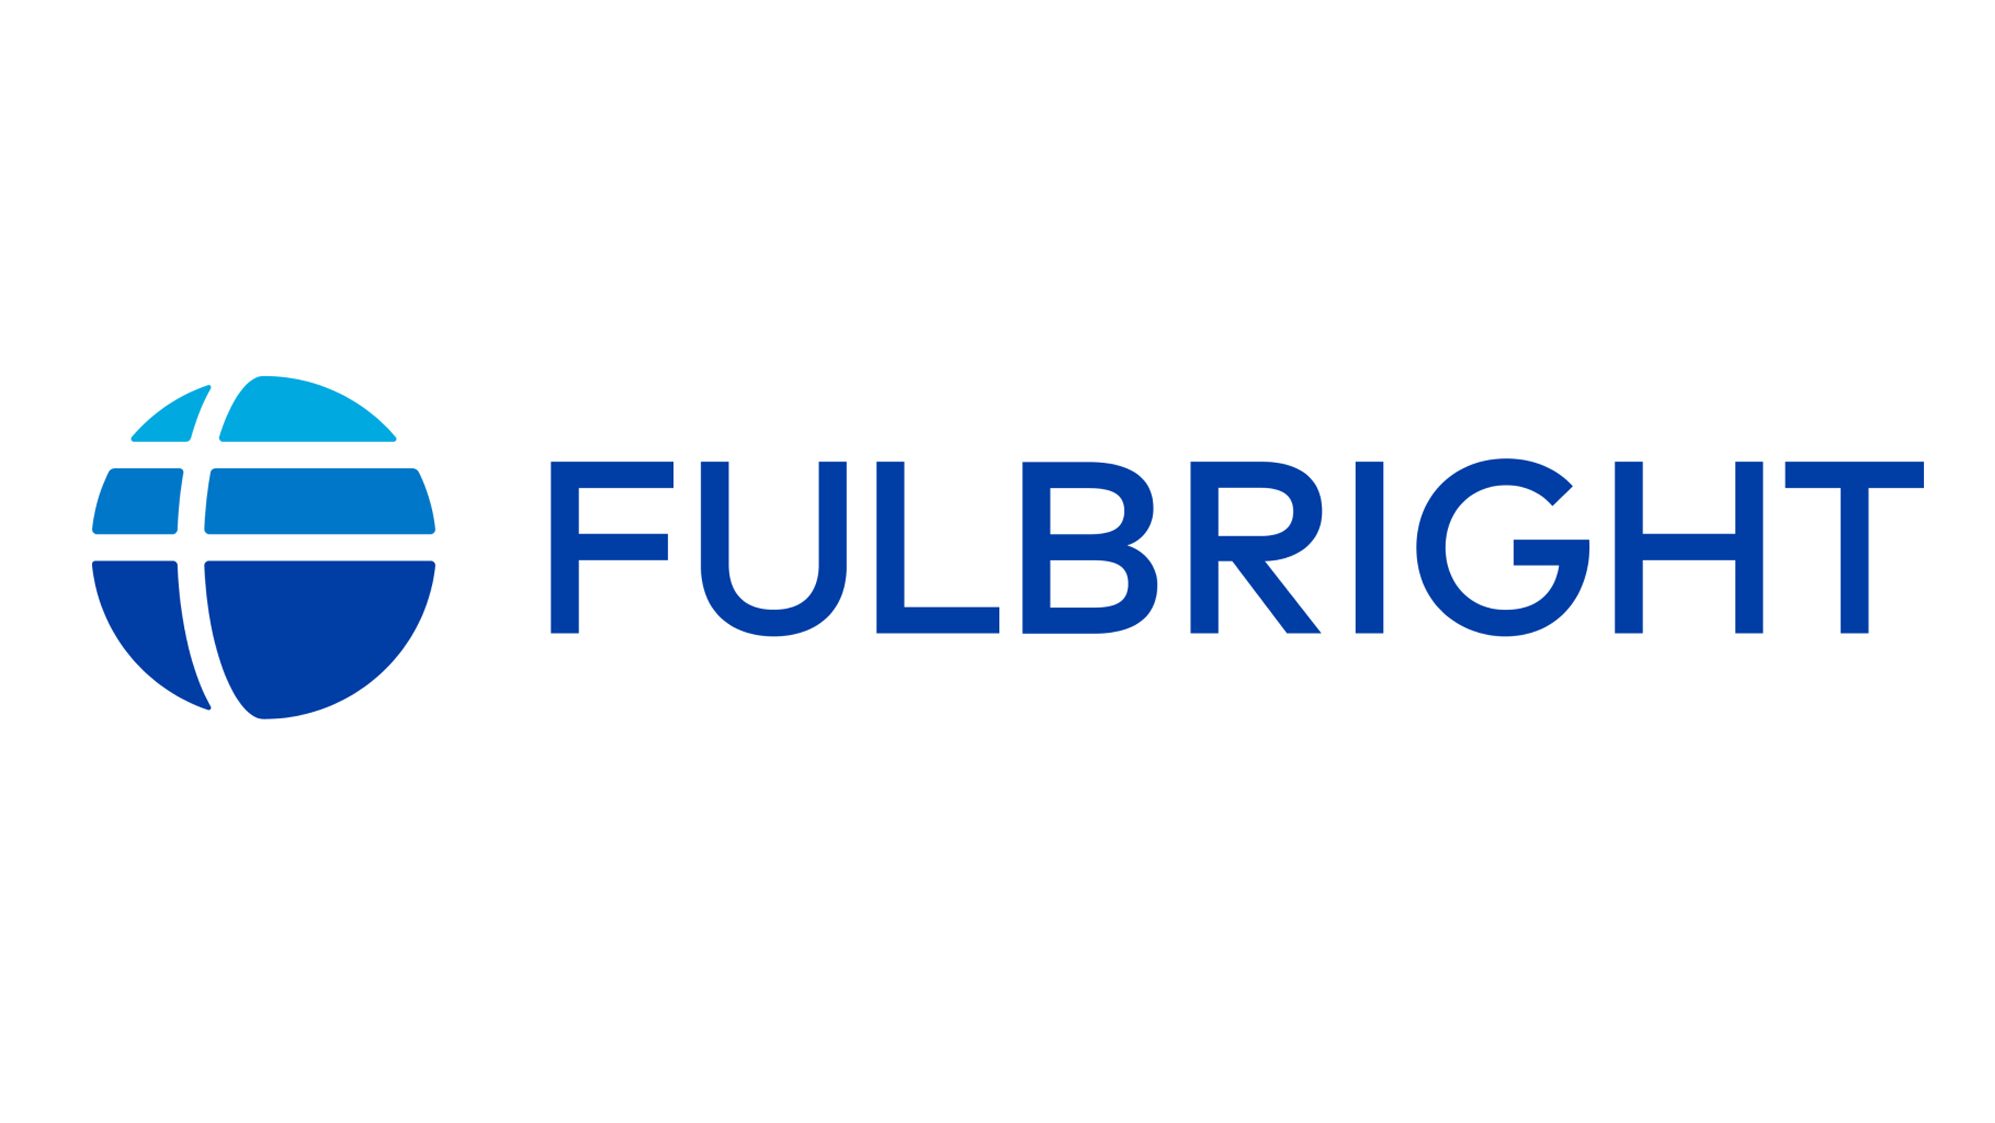 The Fulbright Scholarship logo